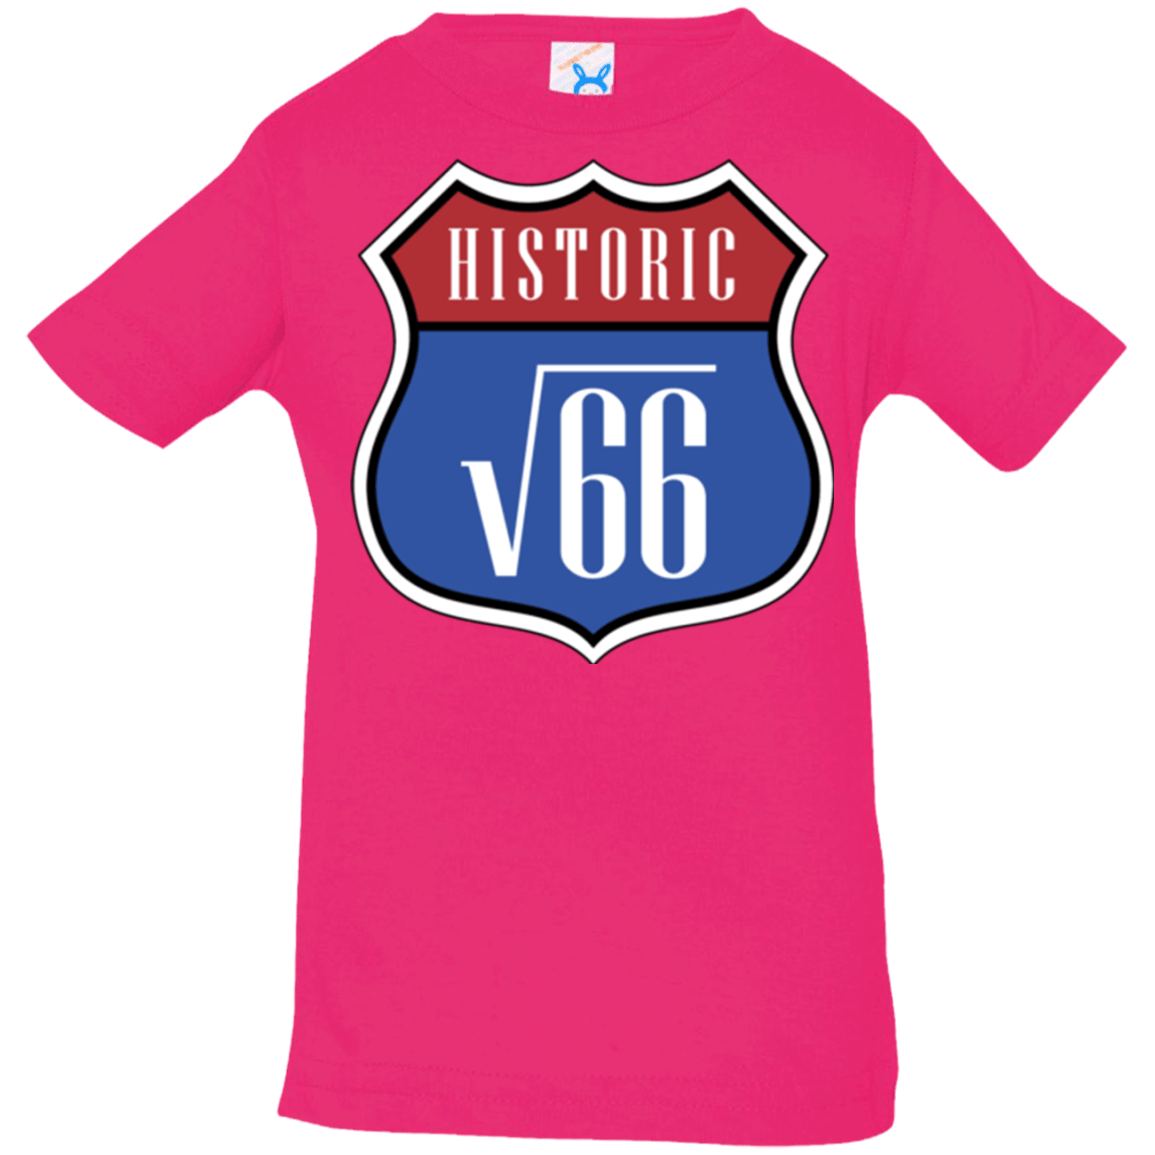 T-Shirts Hot Pink / 6 Months Route v66 Infant PremiumT-Shirt